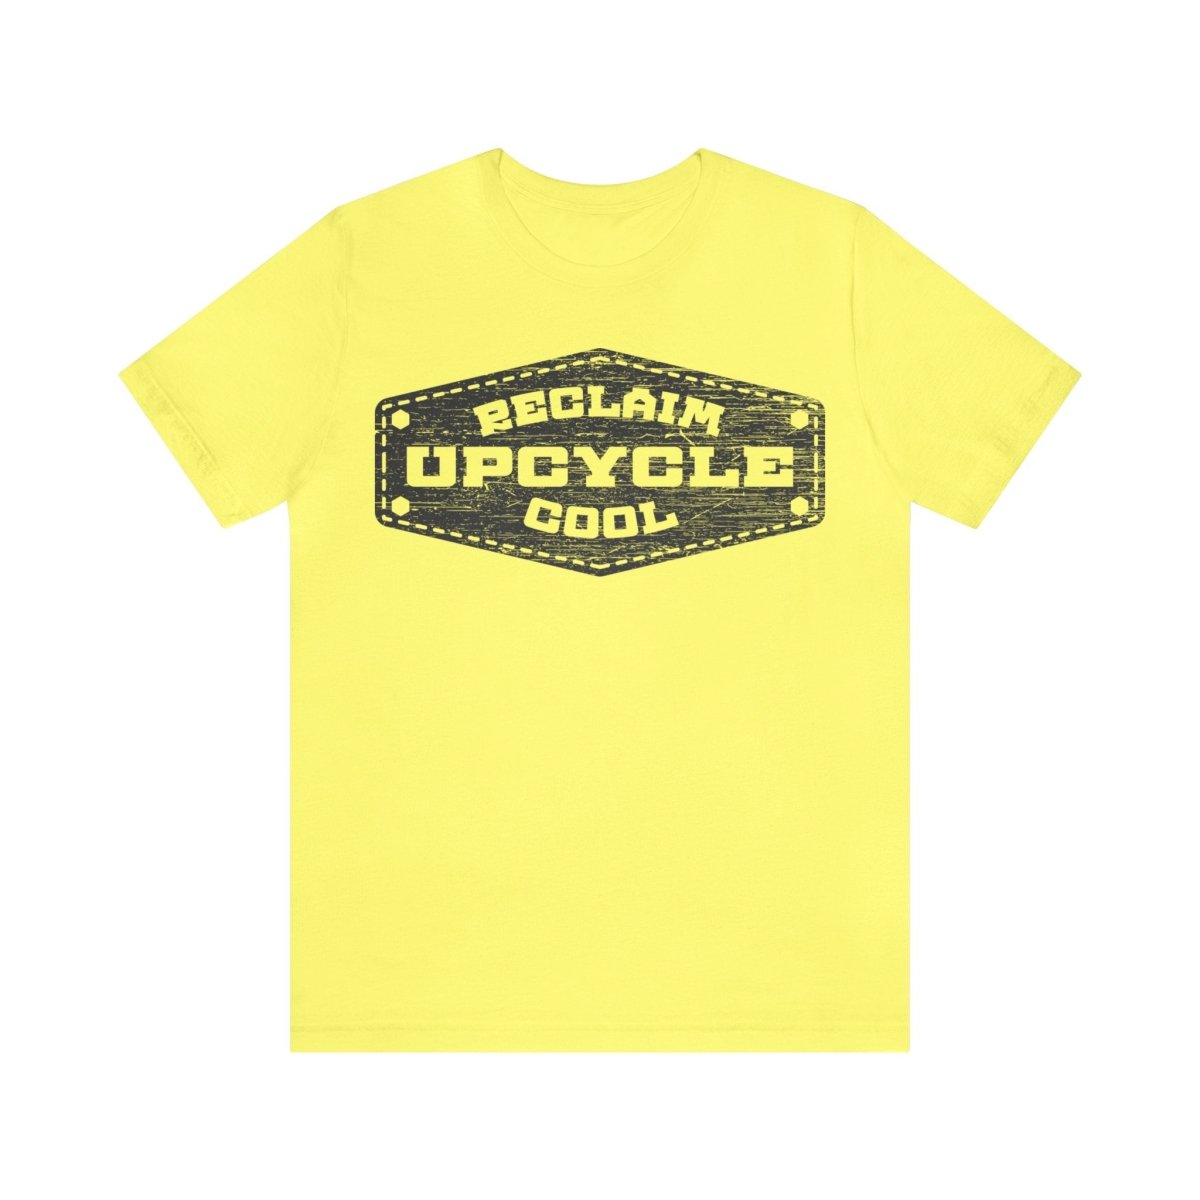 Reclaim Cool - Upcycle Premium T-Shirt, ReUse, Remake, Redo, DIY, Recycle, Repurpose, Self Reliance, Fix It, Junkin' Genius